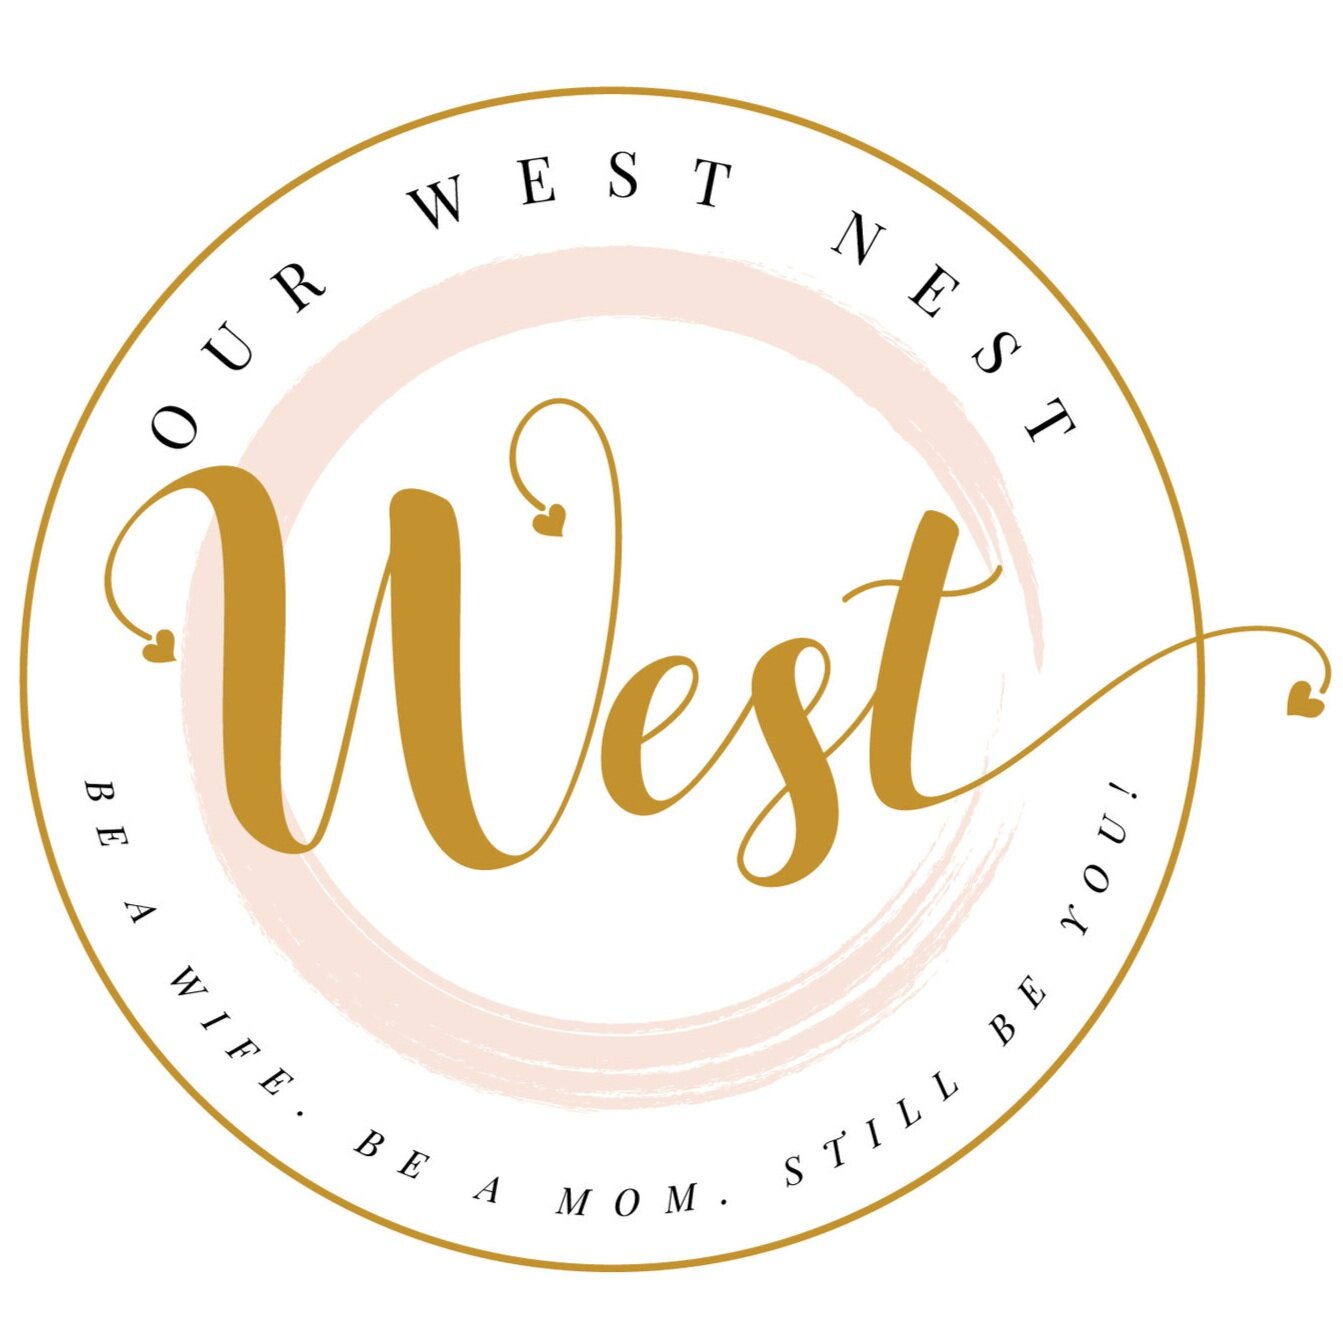 Our West Nest